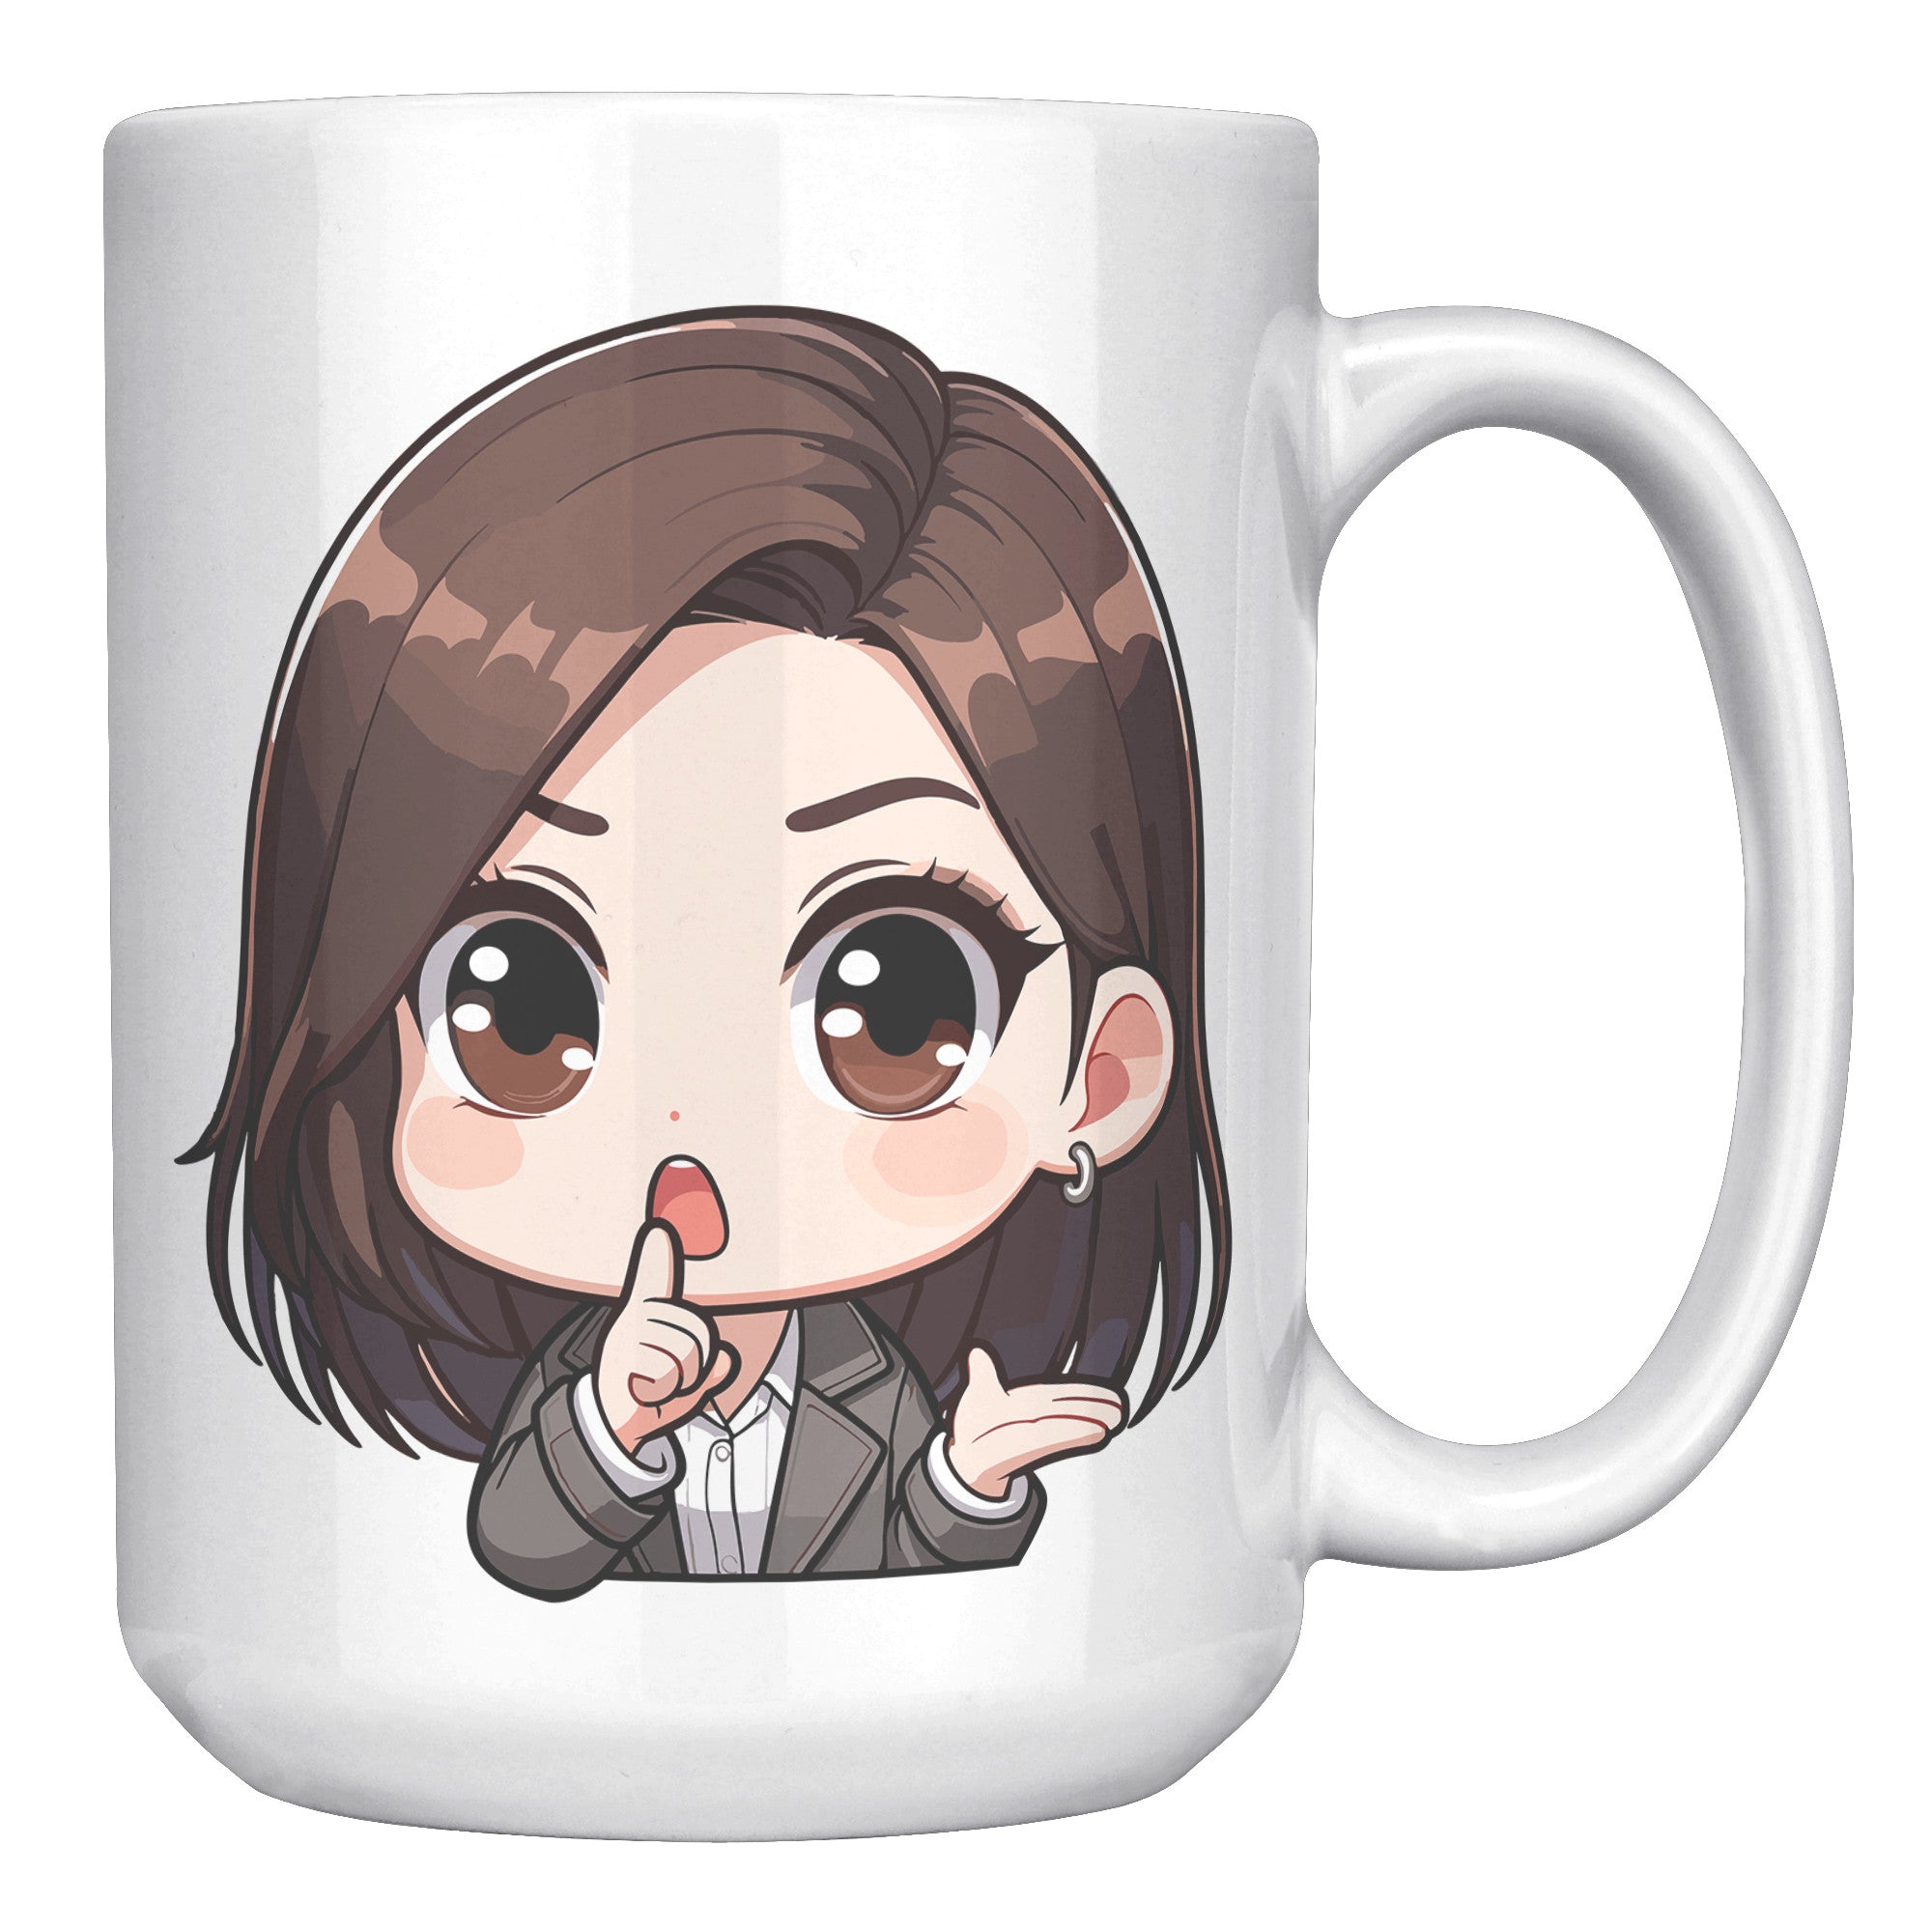 "Marites Gossip Queen Coffee Mug - Cute Cartoon 'Ano Ang Latest?' Cup - Perfect Chismosa Gift - Filipino Slang Tea Mug" - K1